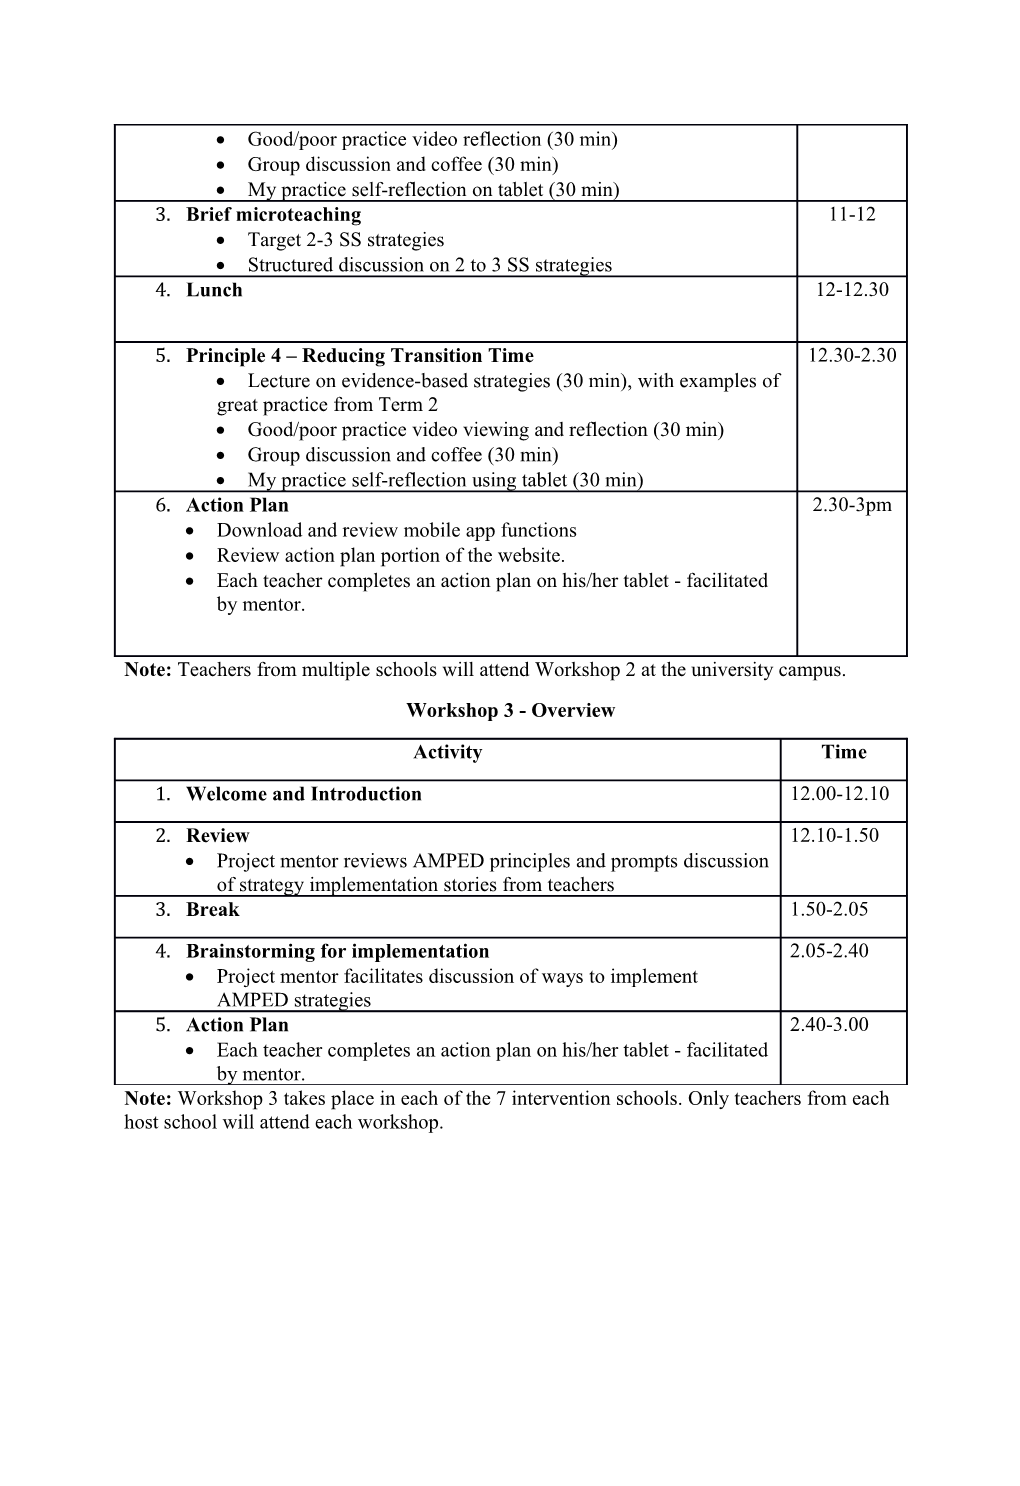 Appendix a Workshop Schedules